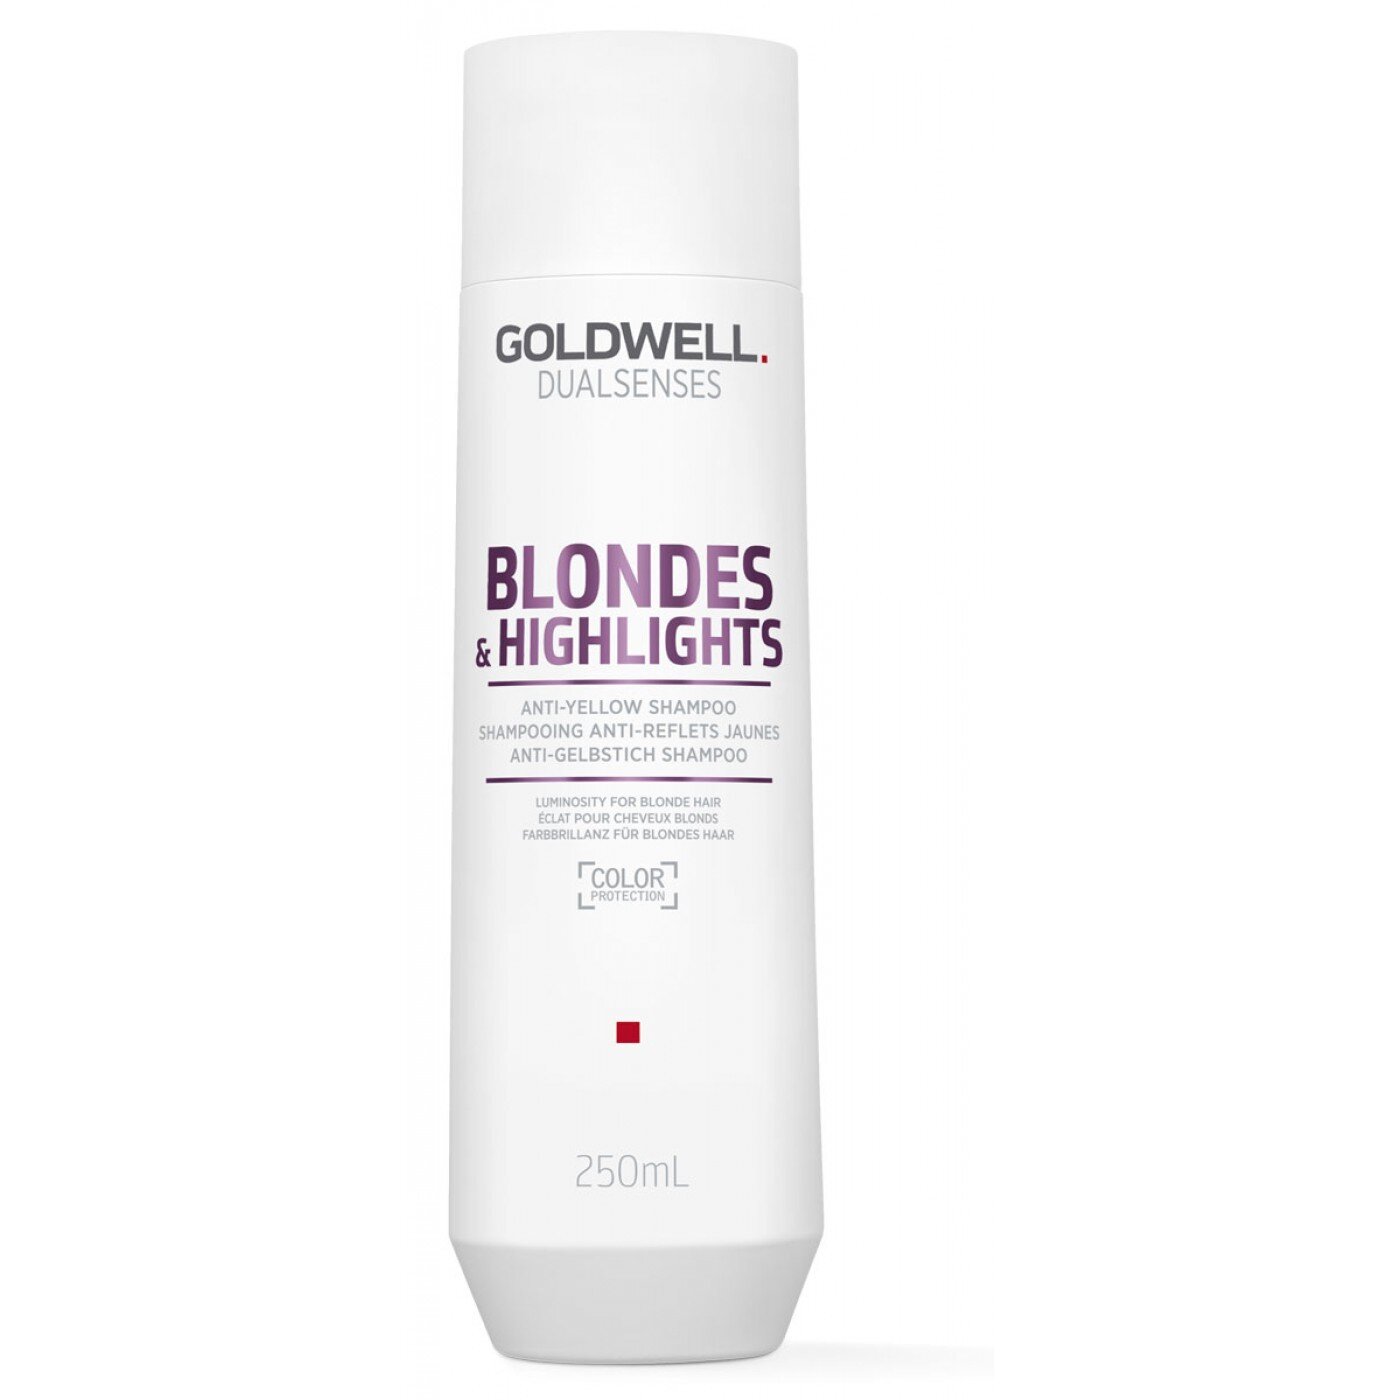 Goldwell Dualsenses | Blondes & Highlights Shampoo 250ml